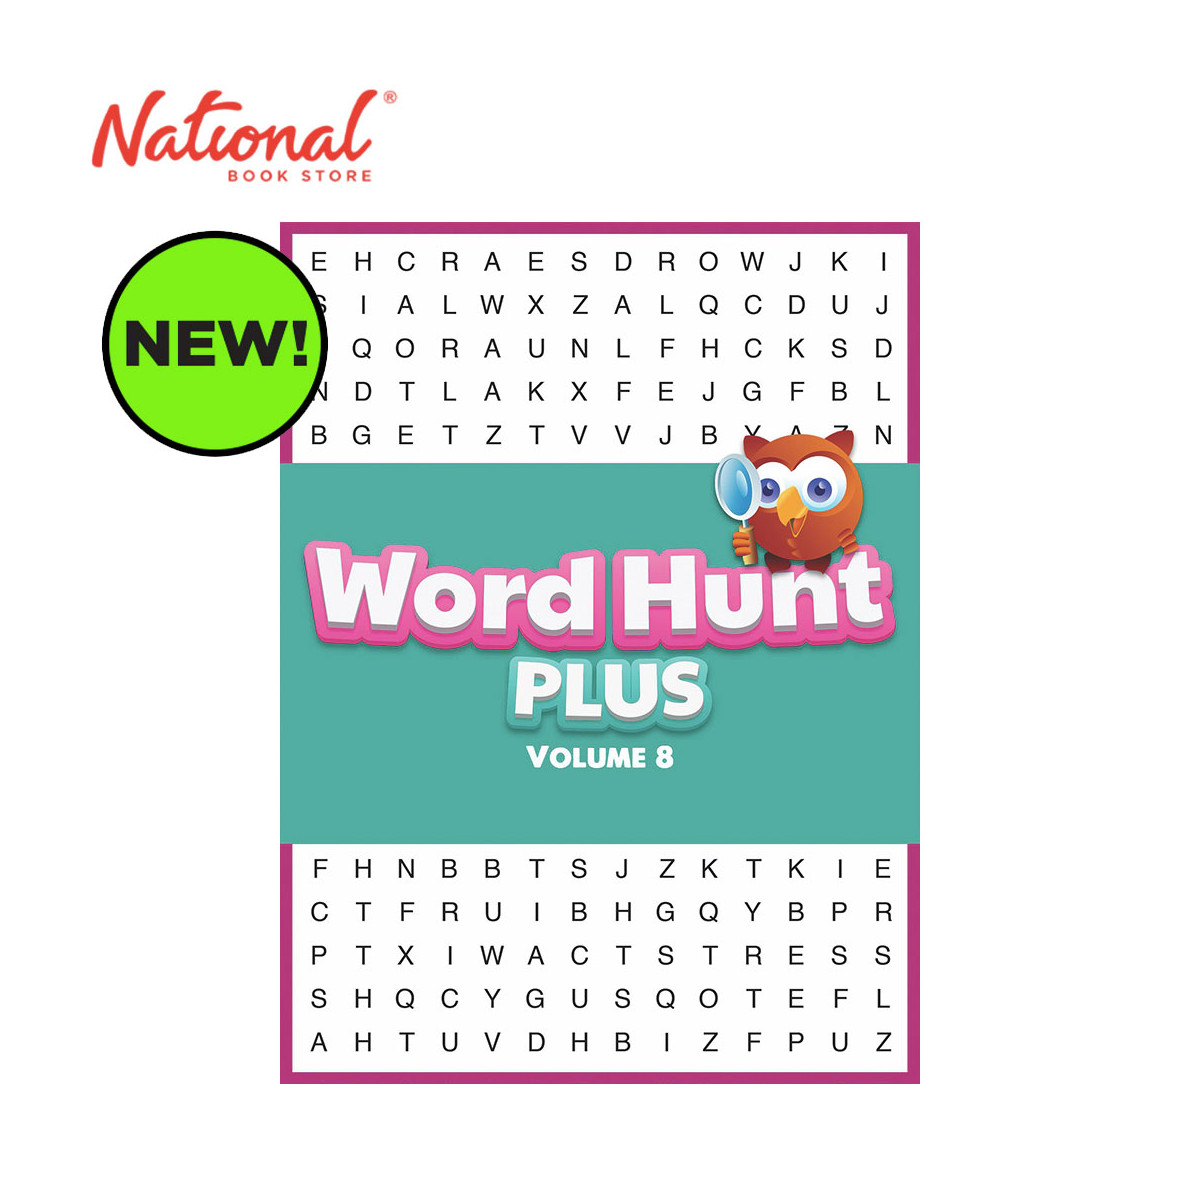 Word Hunt Plus Volume 8 - Trade Paperback - Games